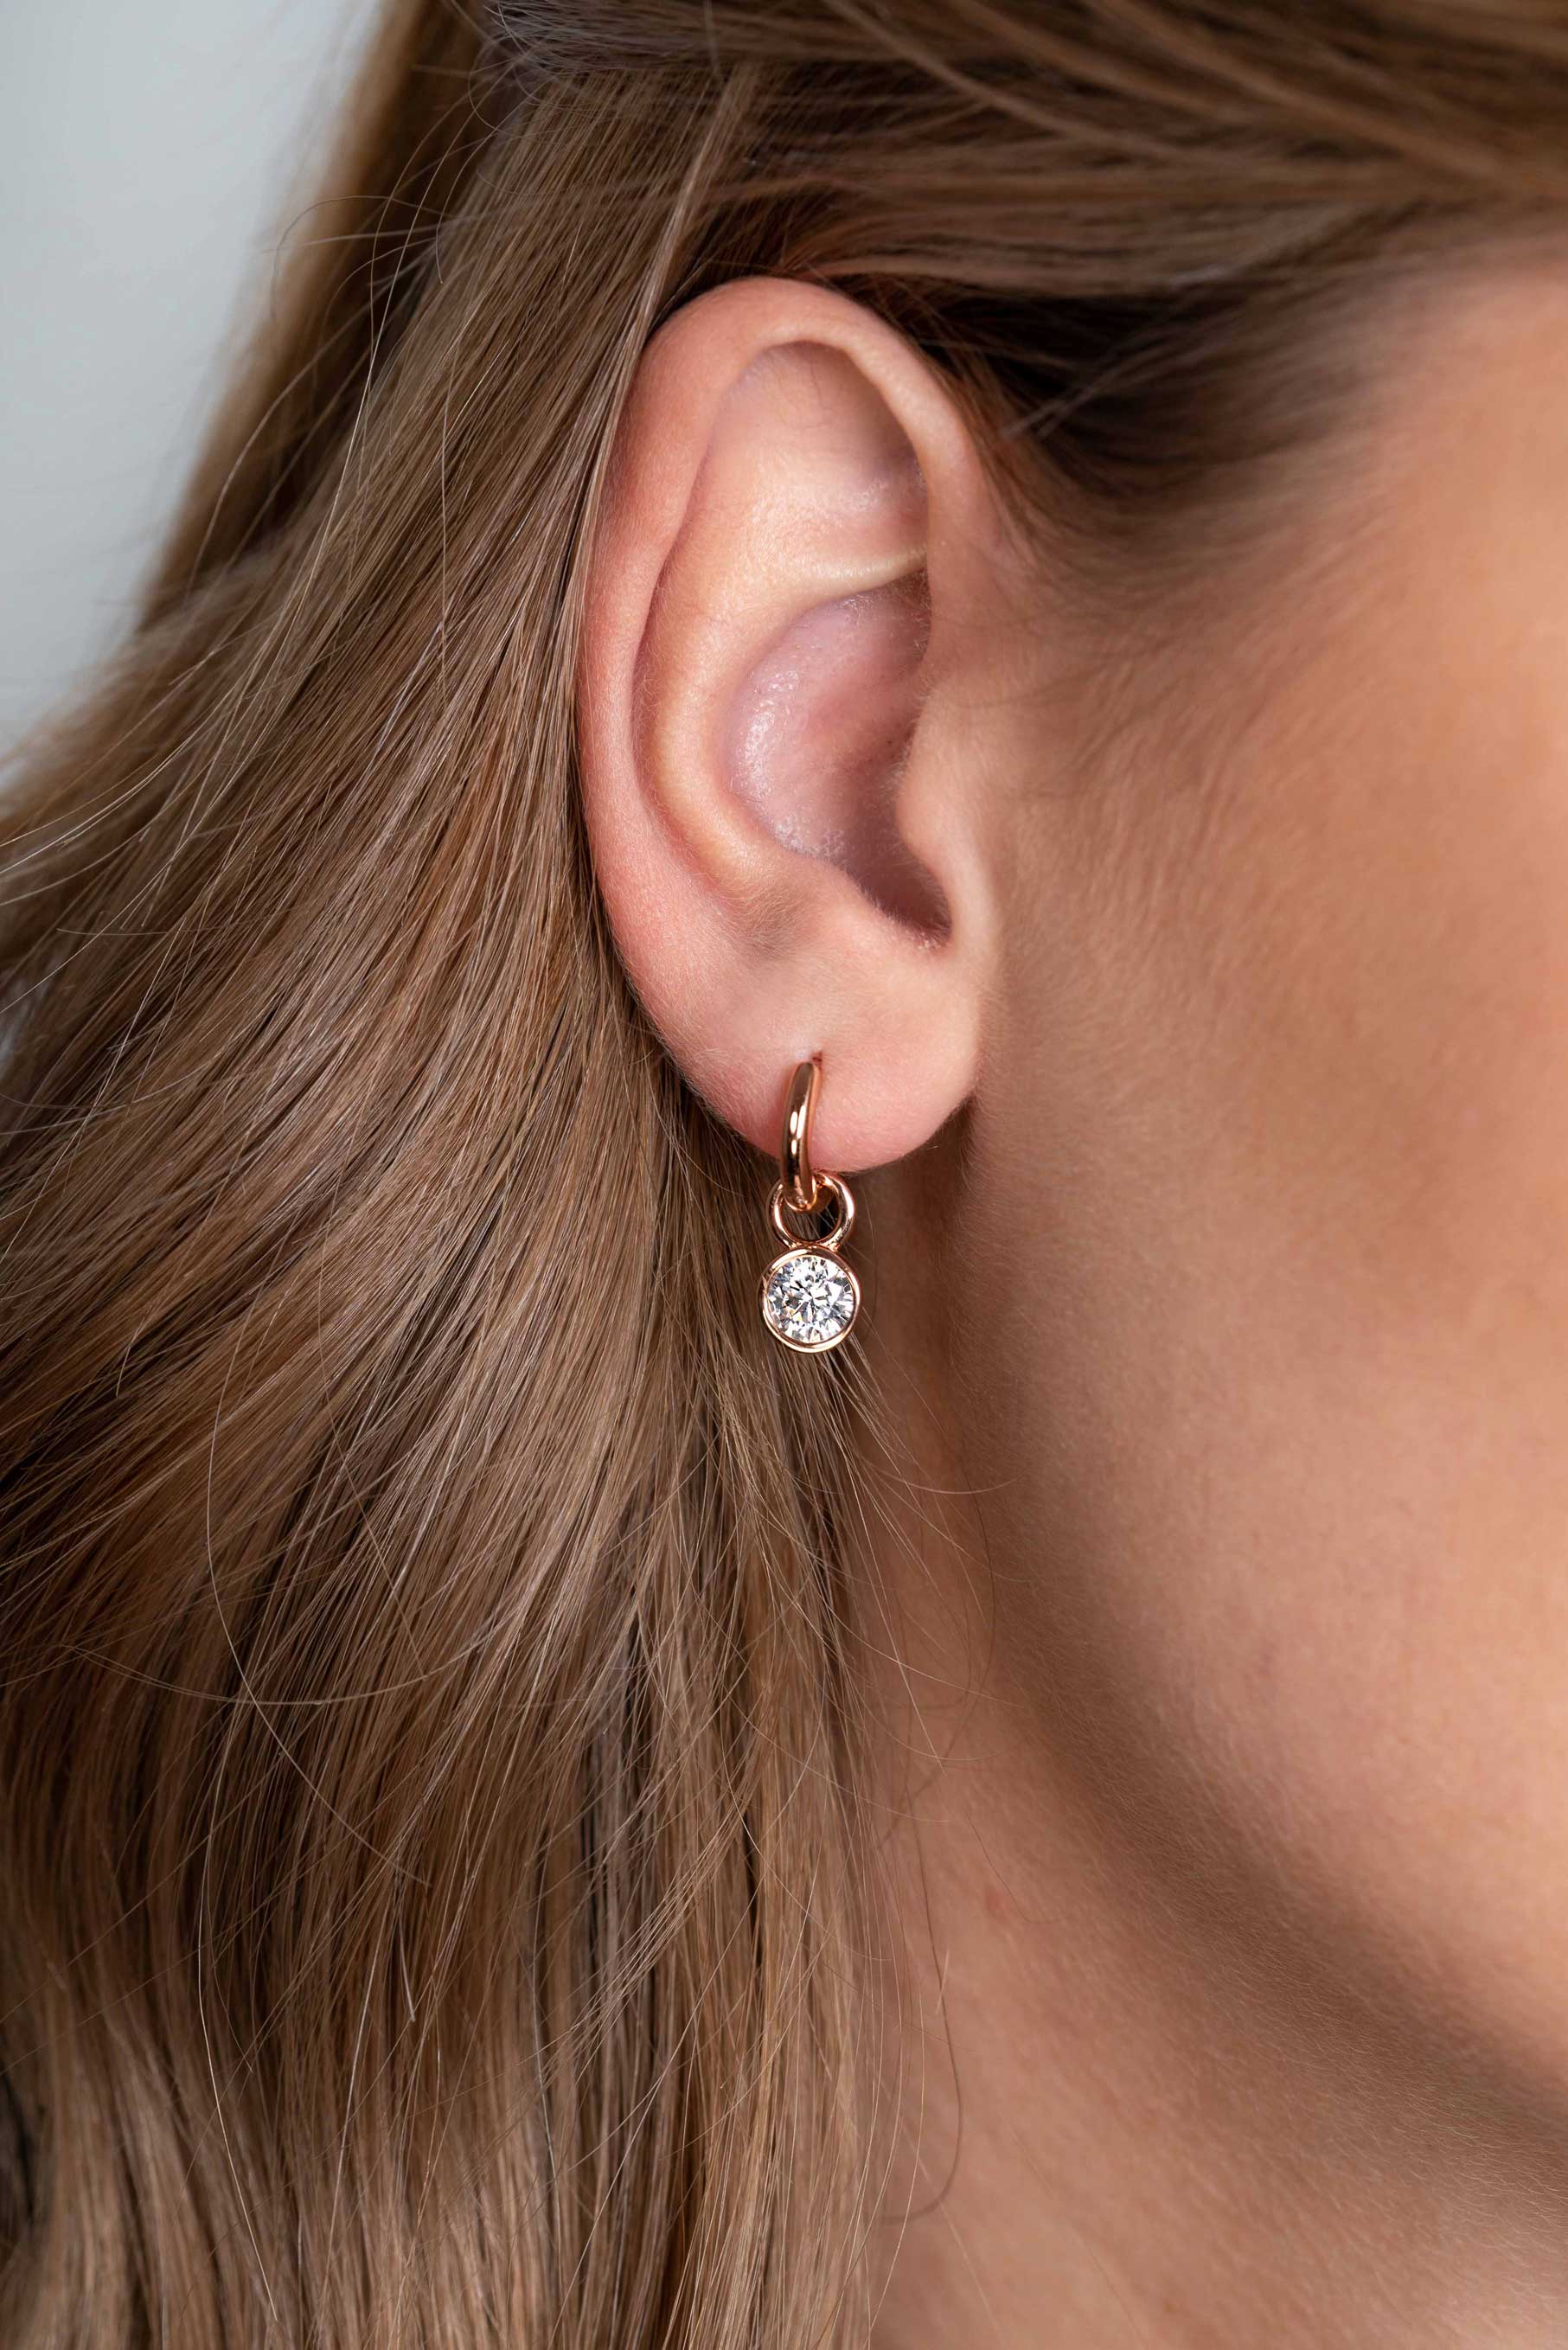 ZINZI Rose Plated Sterling Silver Earrings Pendants 7mm Round White ZICH1486D (excl. hoop earrings)